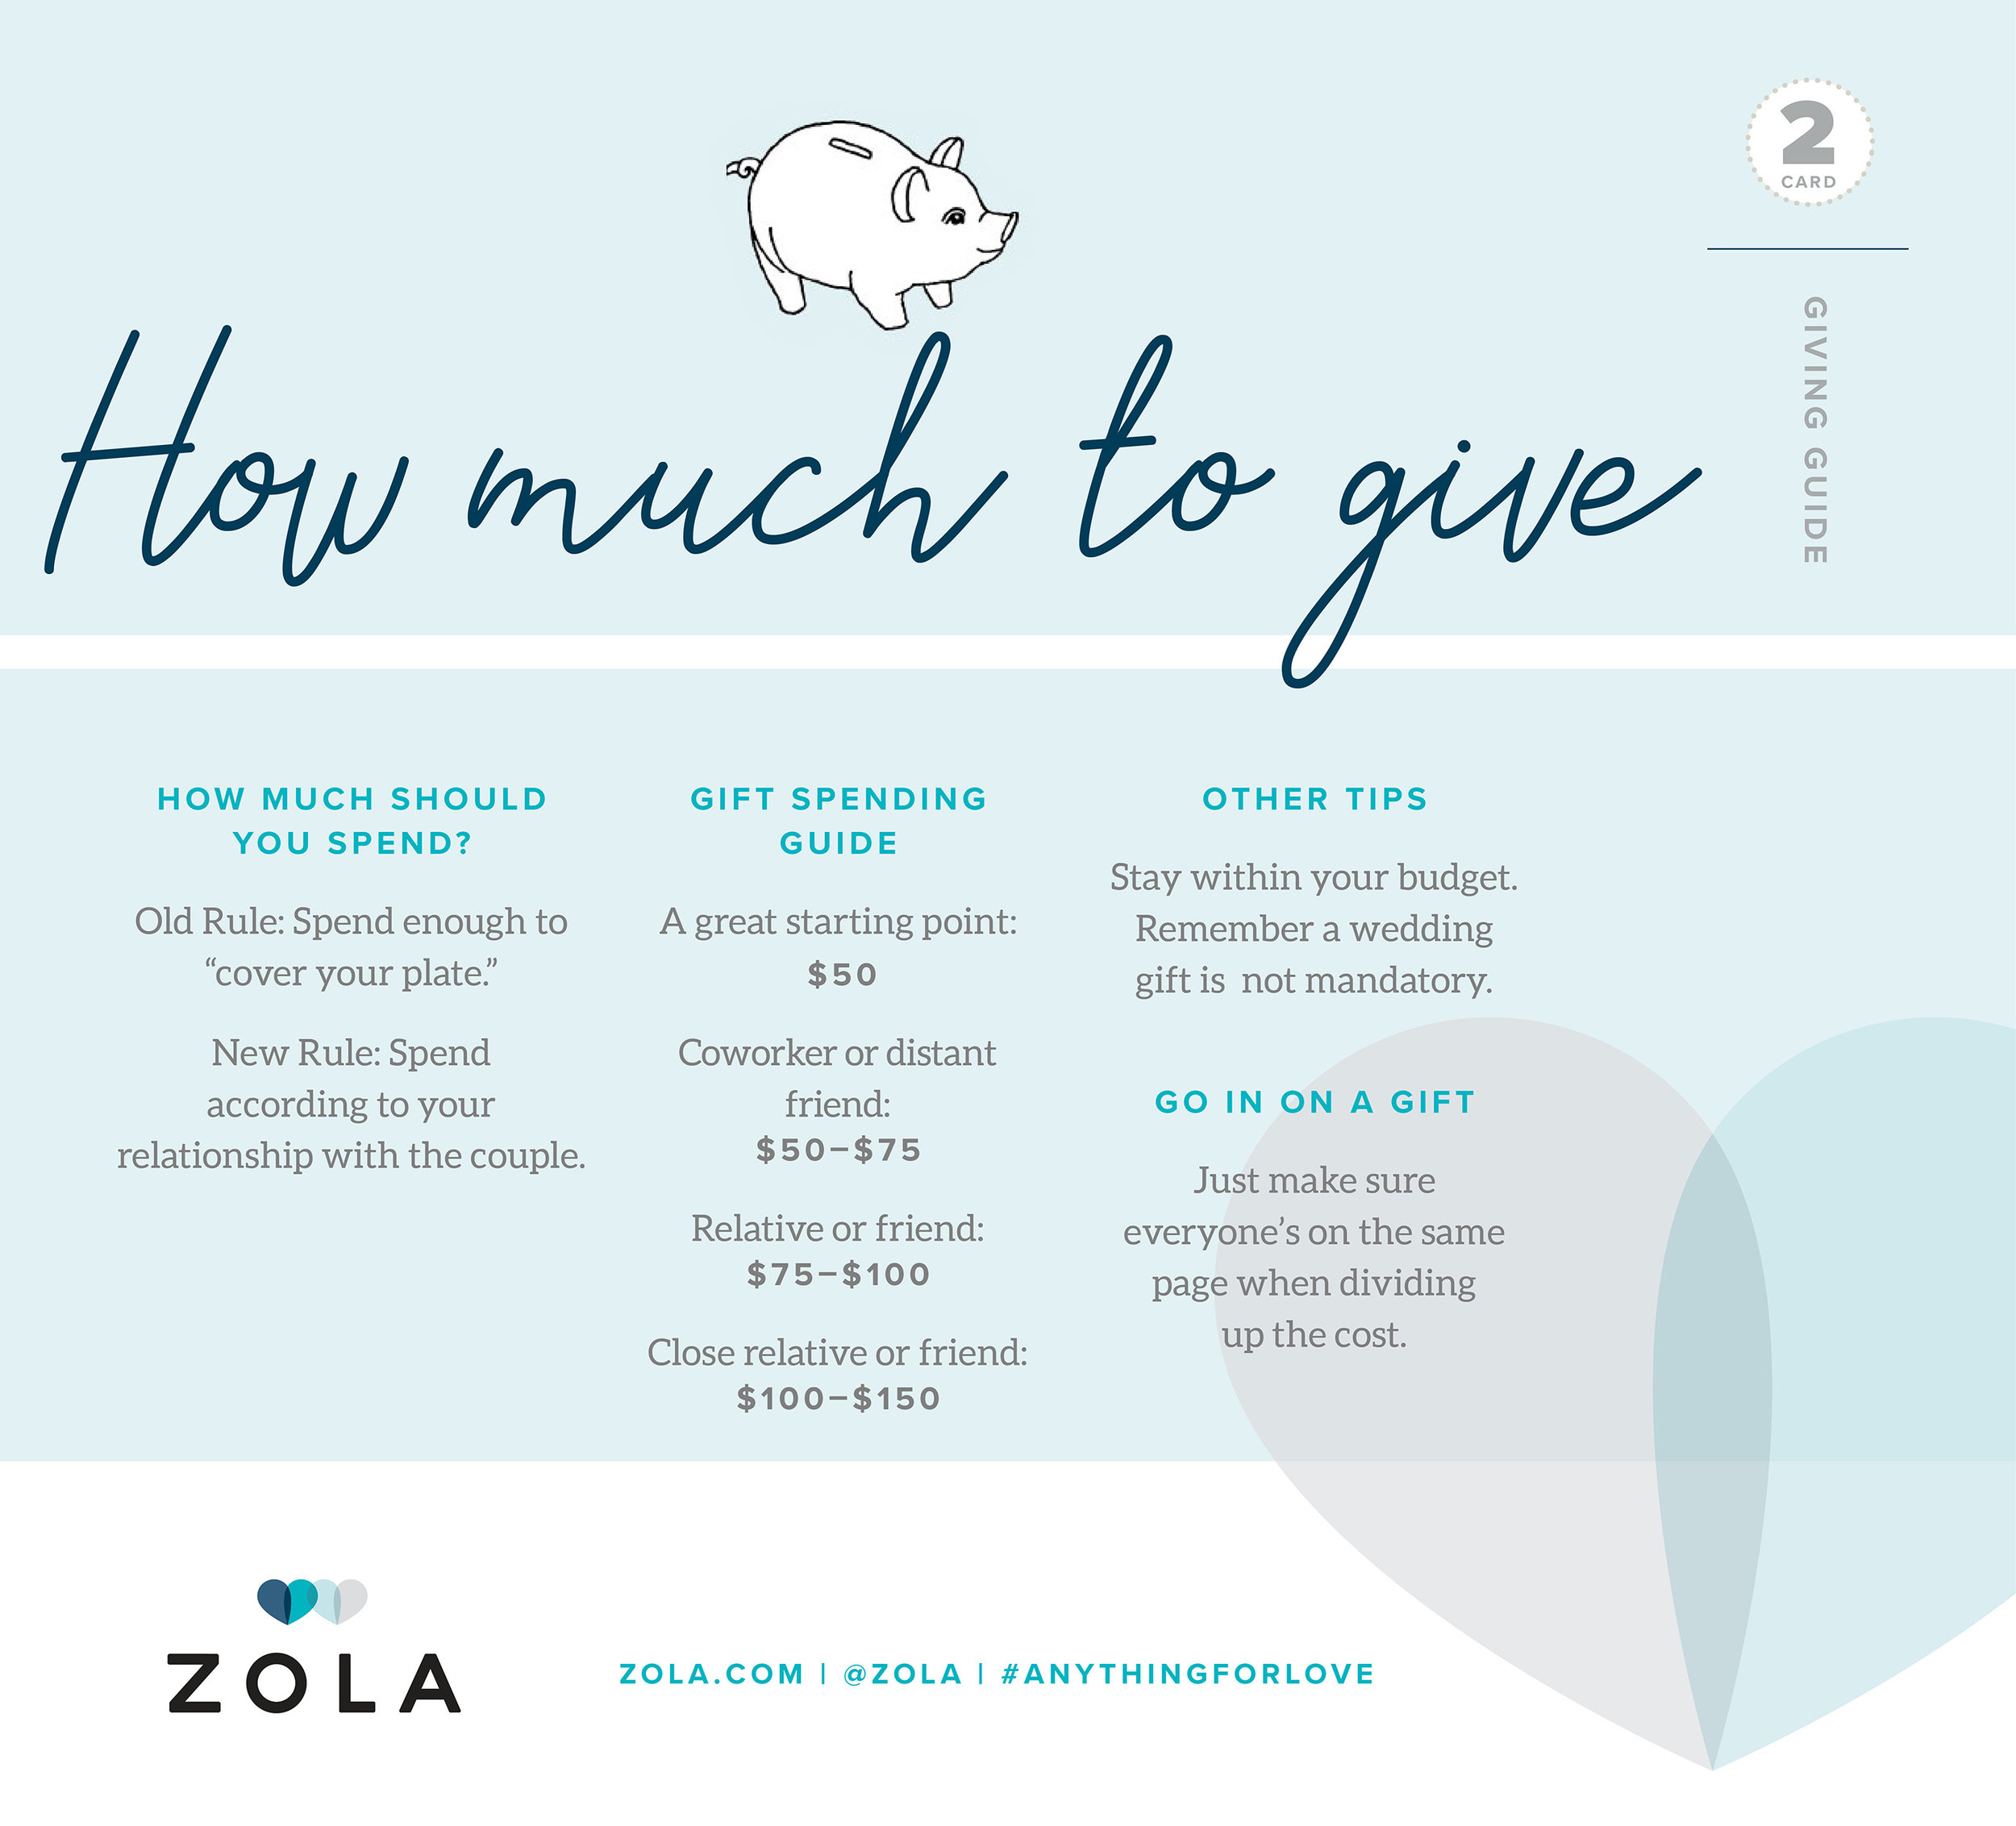 Zola_card2-01.jpg